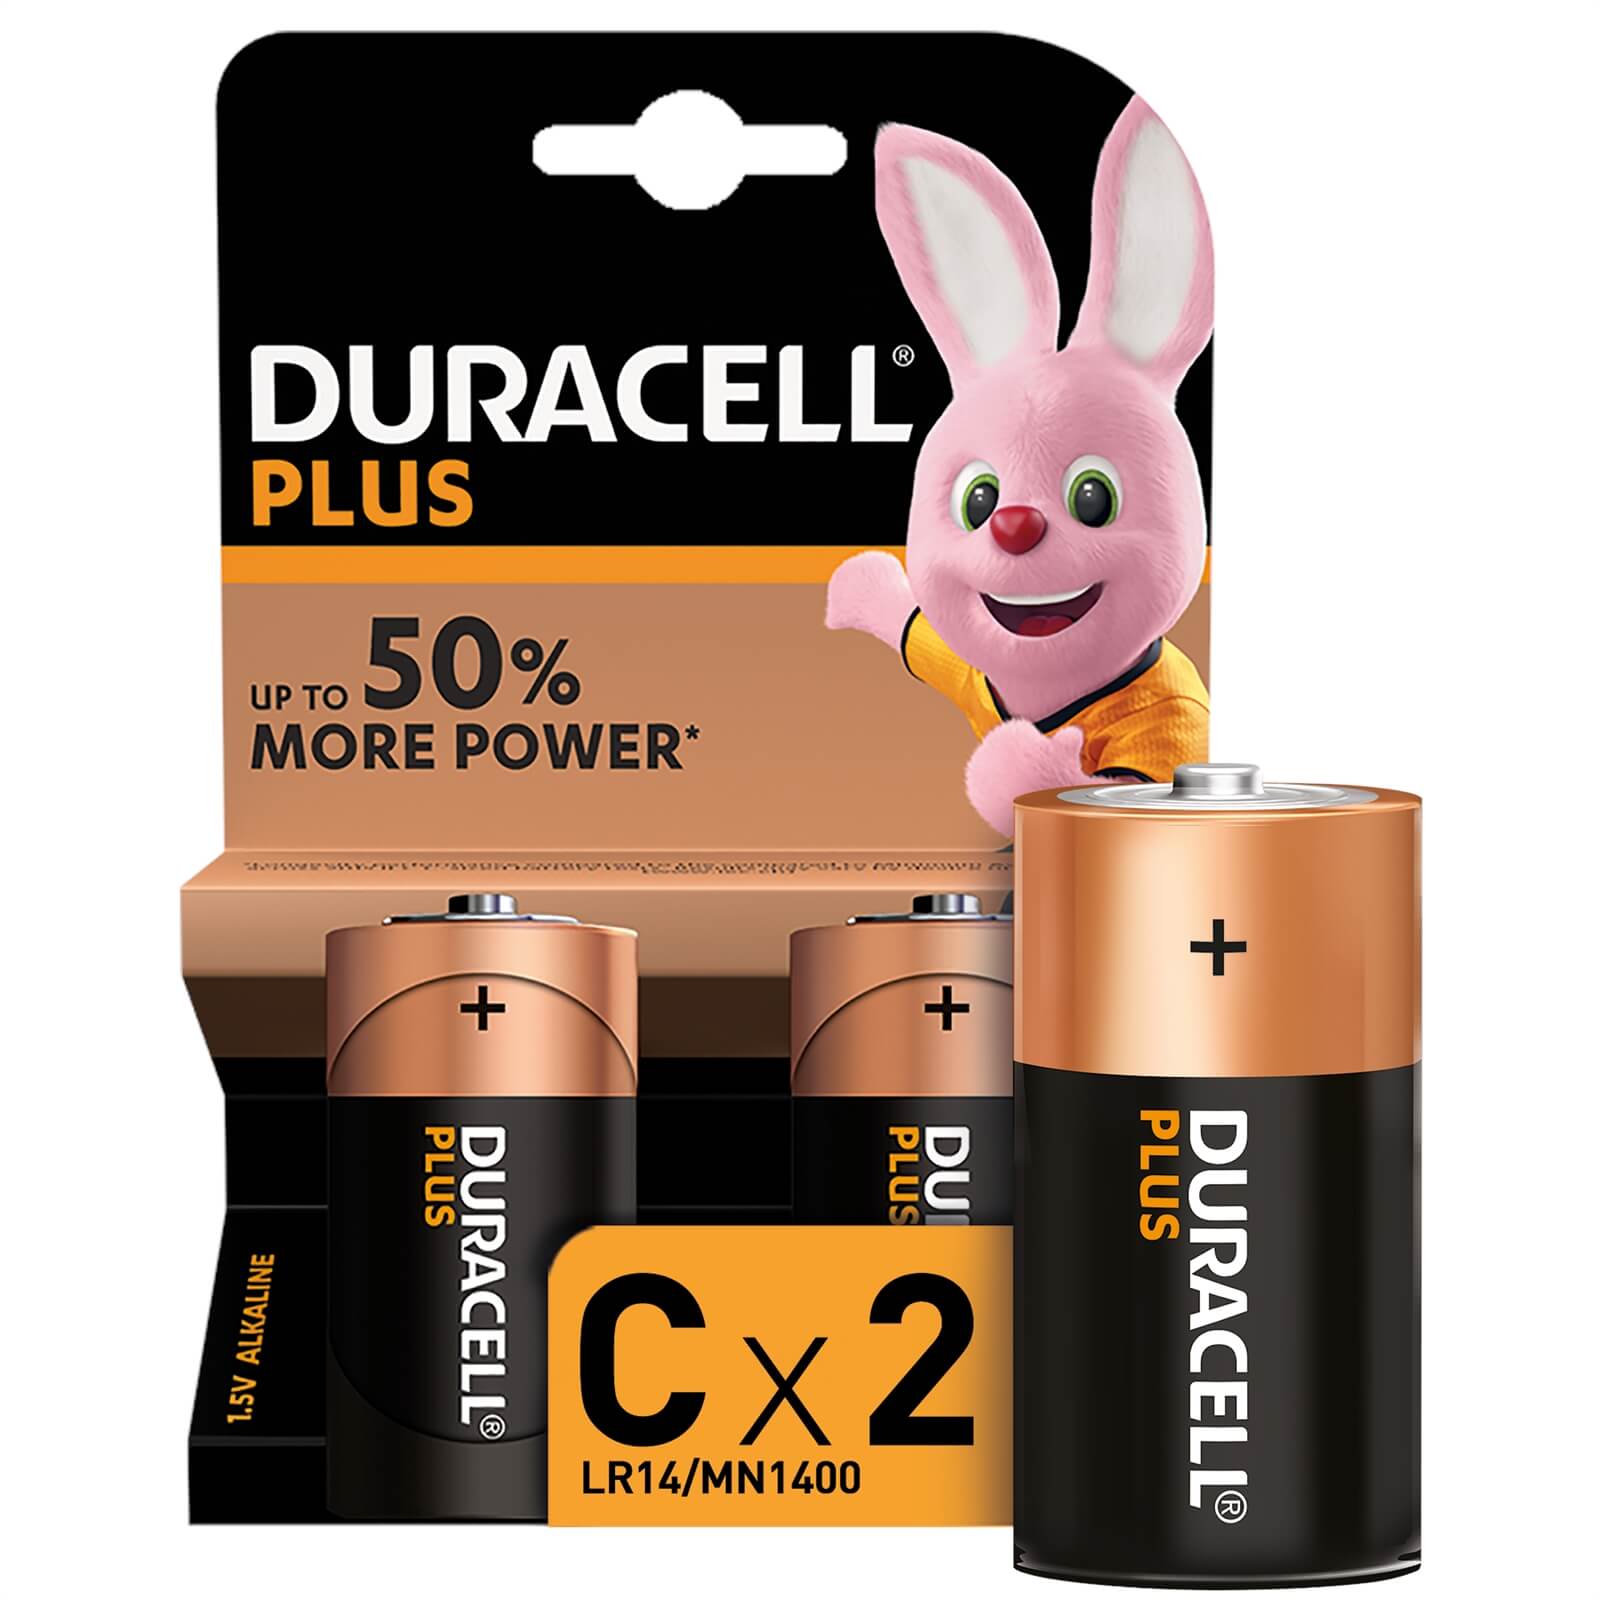 Duracell Plus Type C Batteries (MN1400 C K2) - 2 Pack